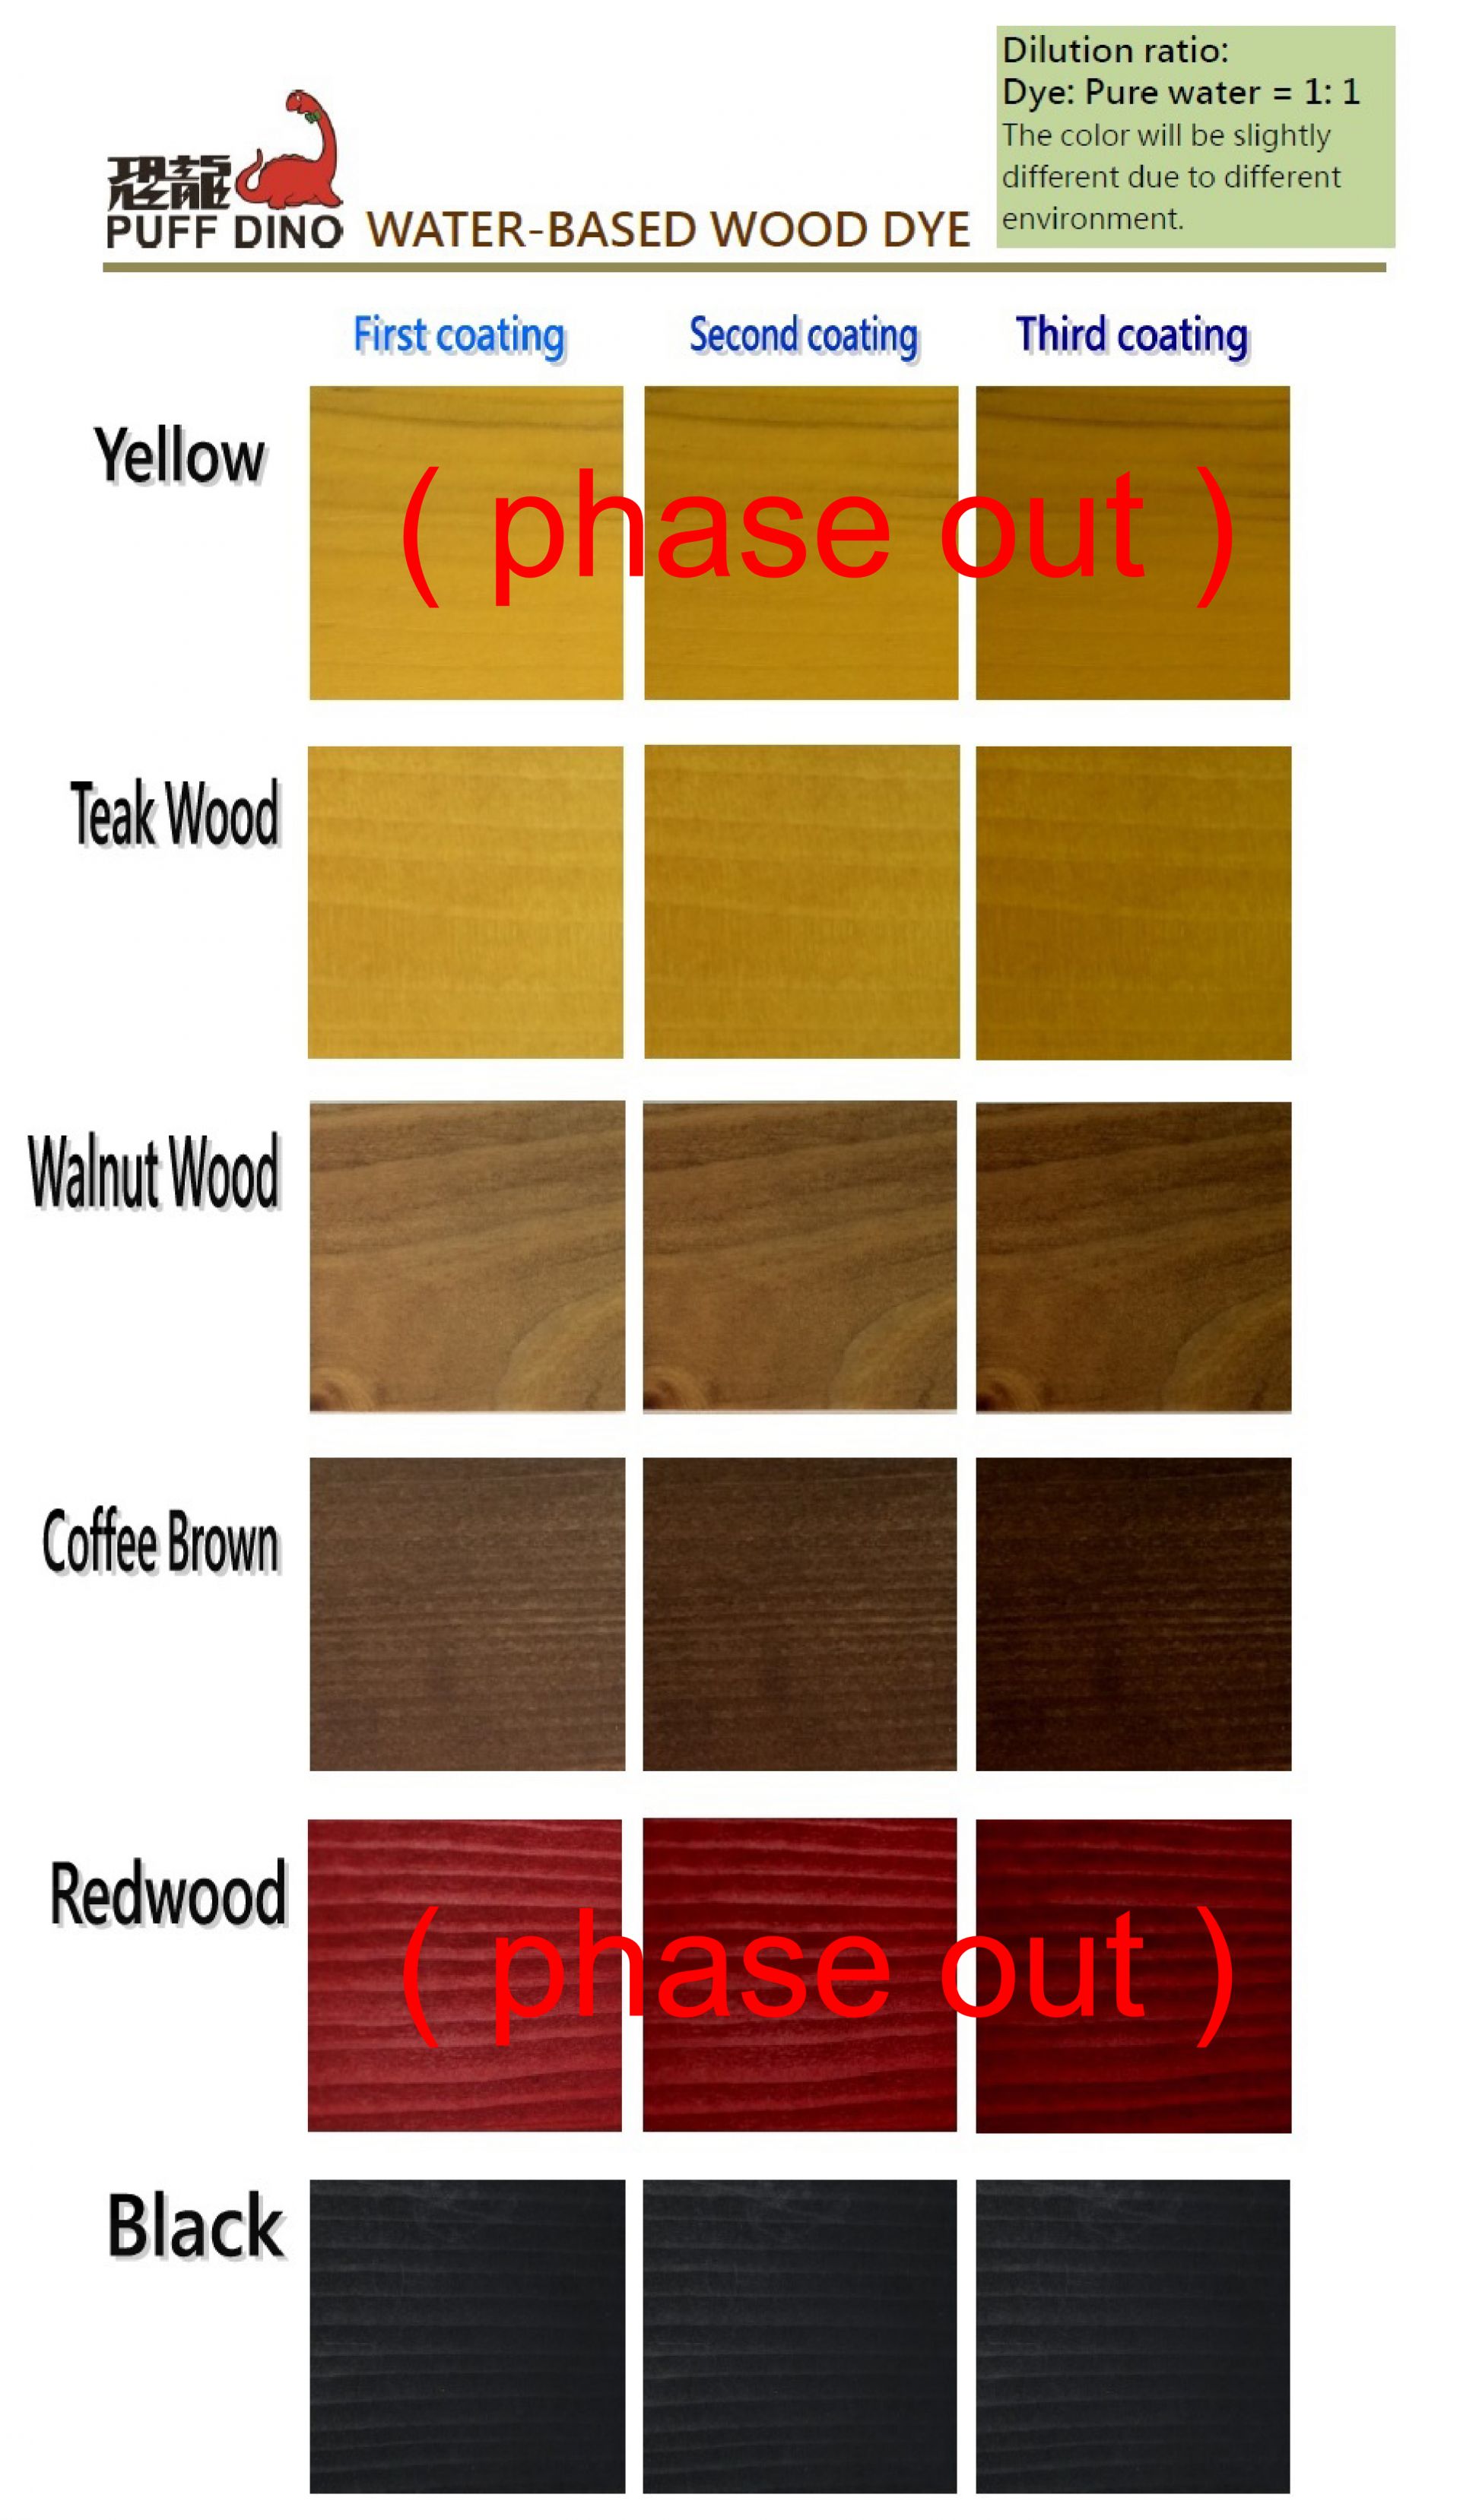 PUFF DINO Water-Based Wood Dye-DM